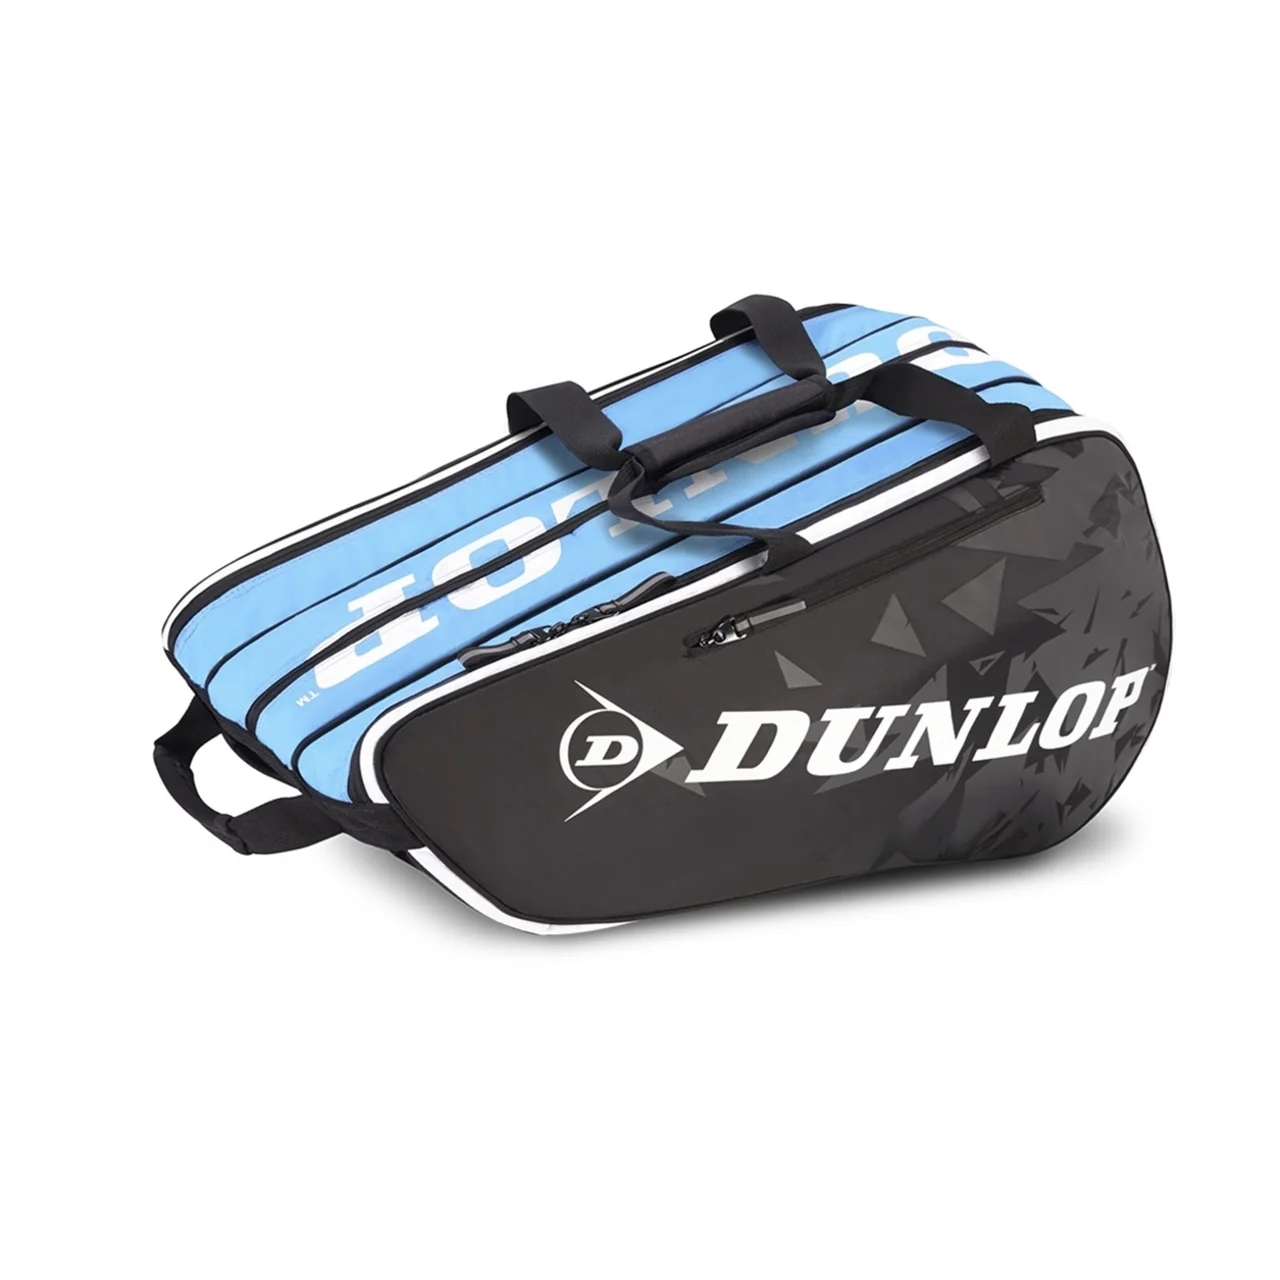 Dunlop Tour 6 Racket Bag 2.0 Black/Blue